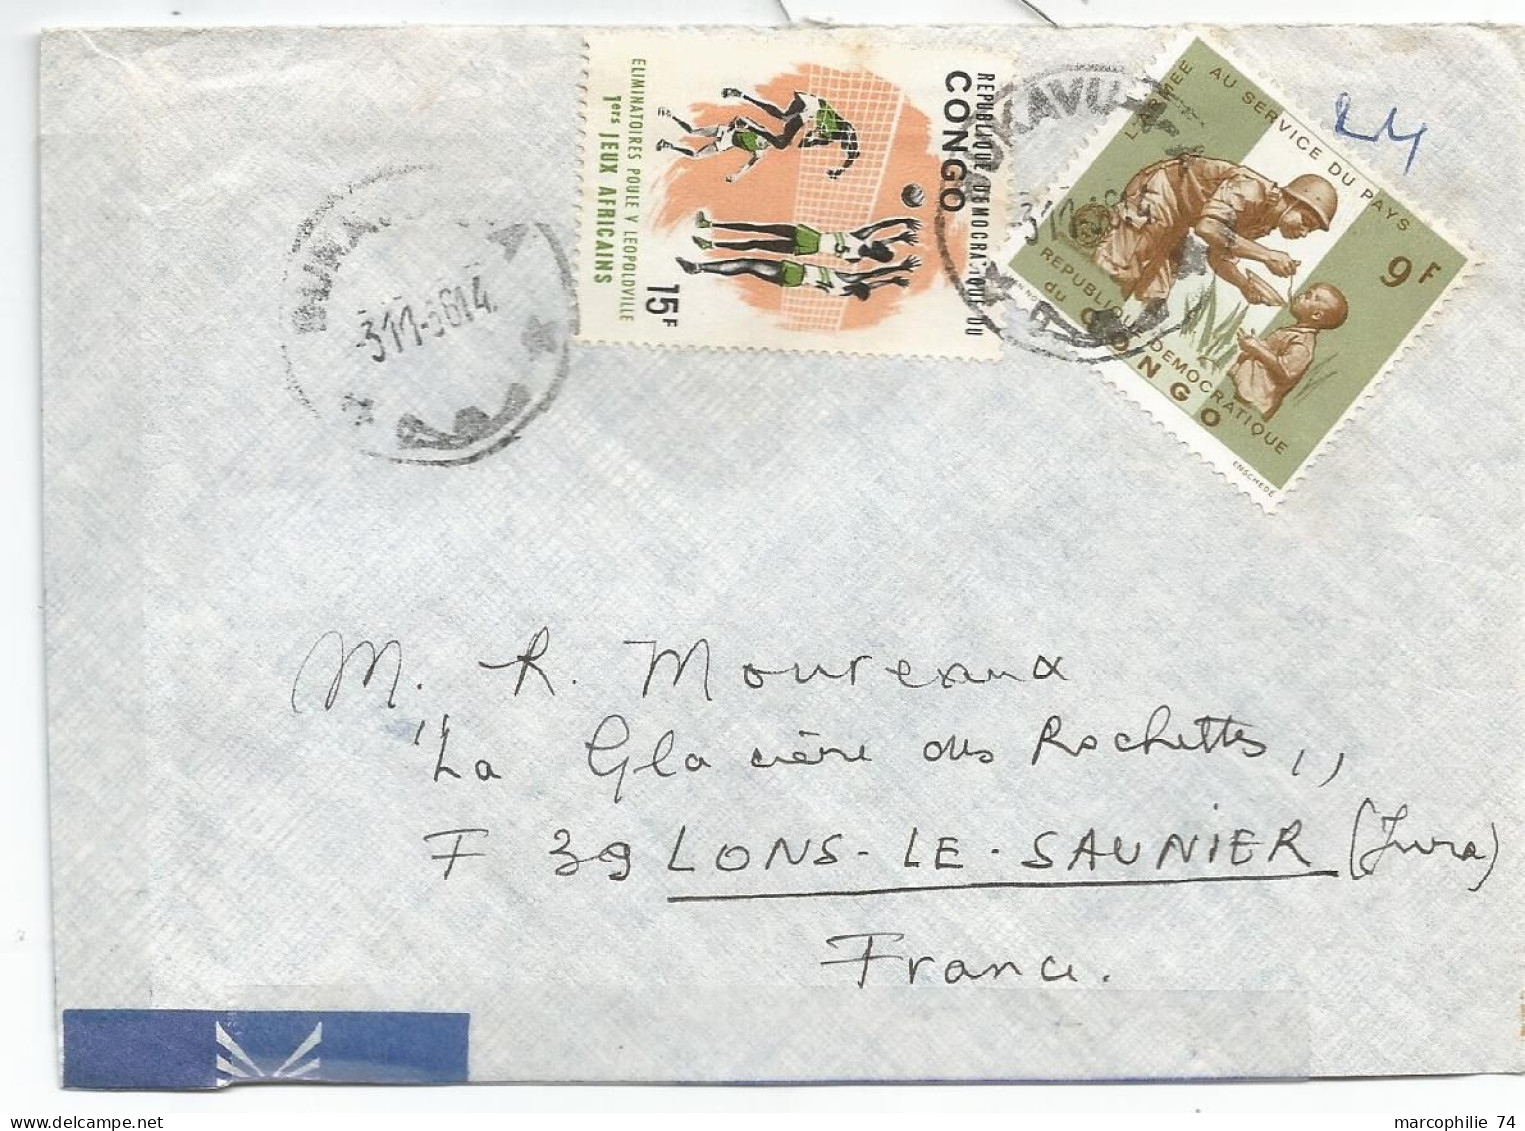 CONGO BELGE 9FR + 15FR VOLLEY BALL LETTRE COVER AVION BUKAVU 1964 TO FRANCE - Briefe U. Dokumente